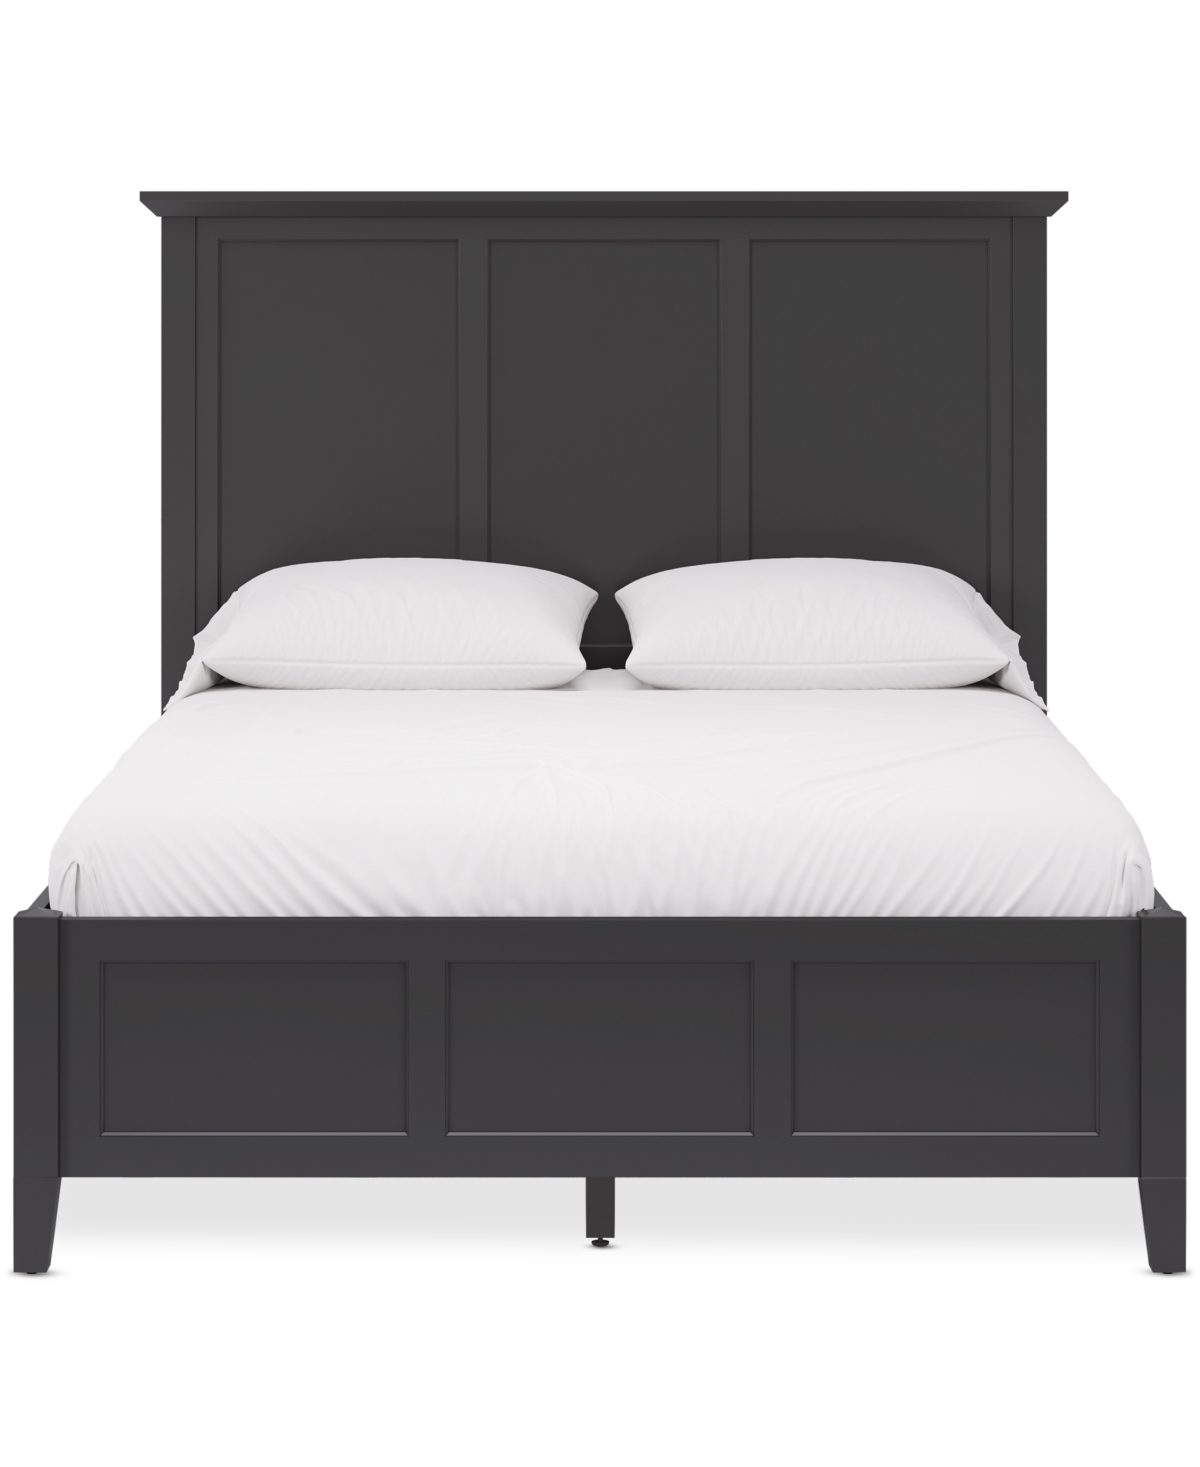 Furniture Hedworth California King Bed In Black